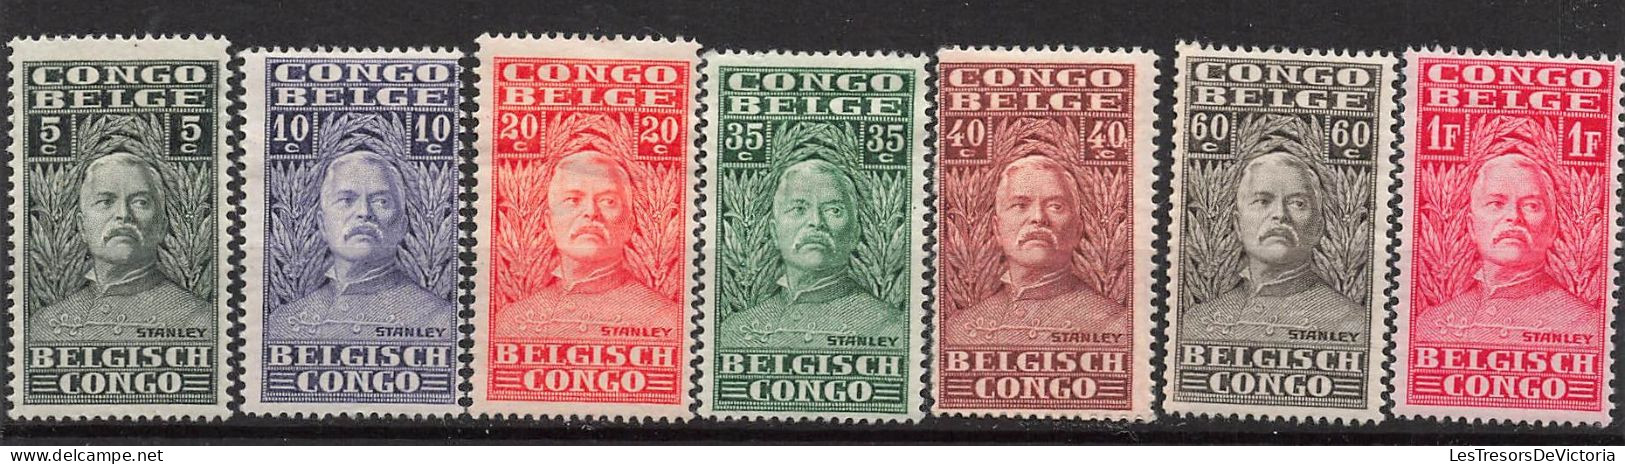 Timbre - Congo Belge - 1928 - COB135/49* - Explorateur Henri Morton Stanley - Cote 50 - Nuevos